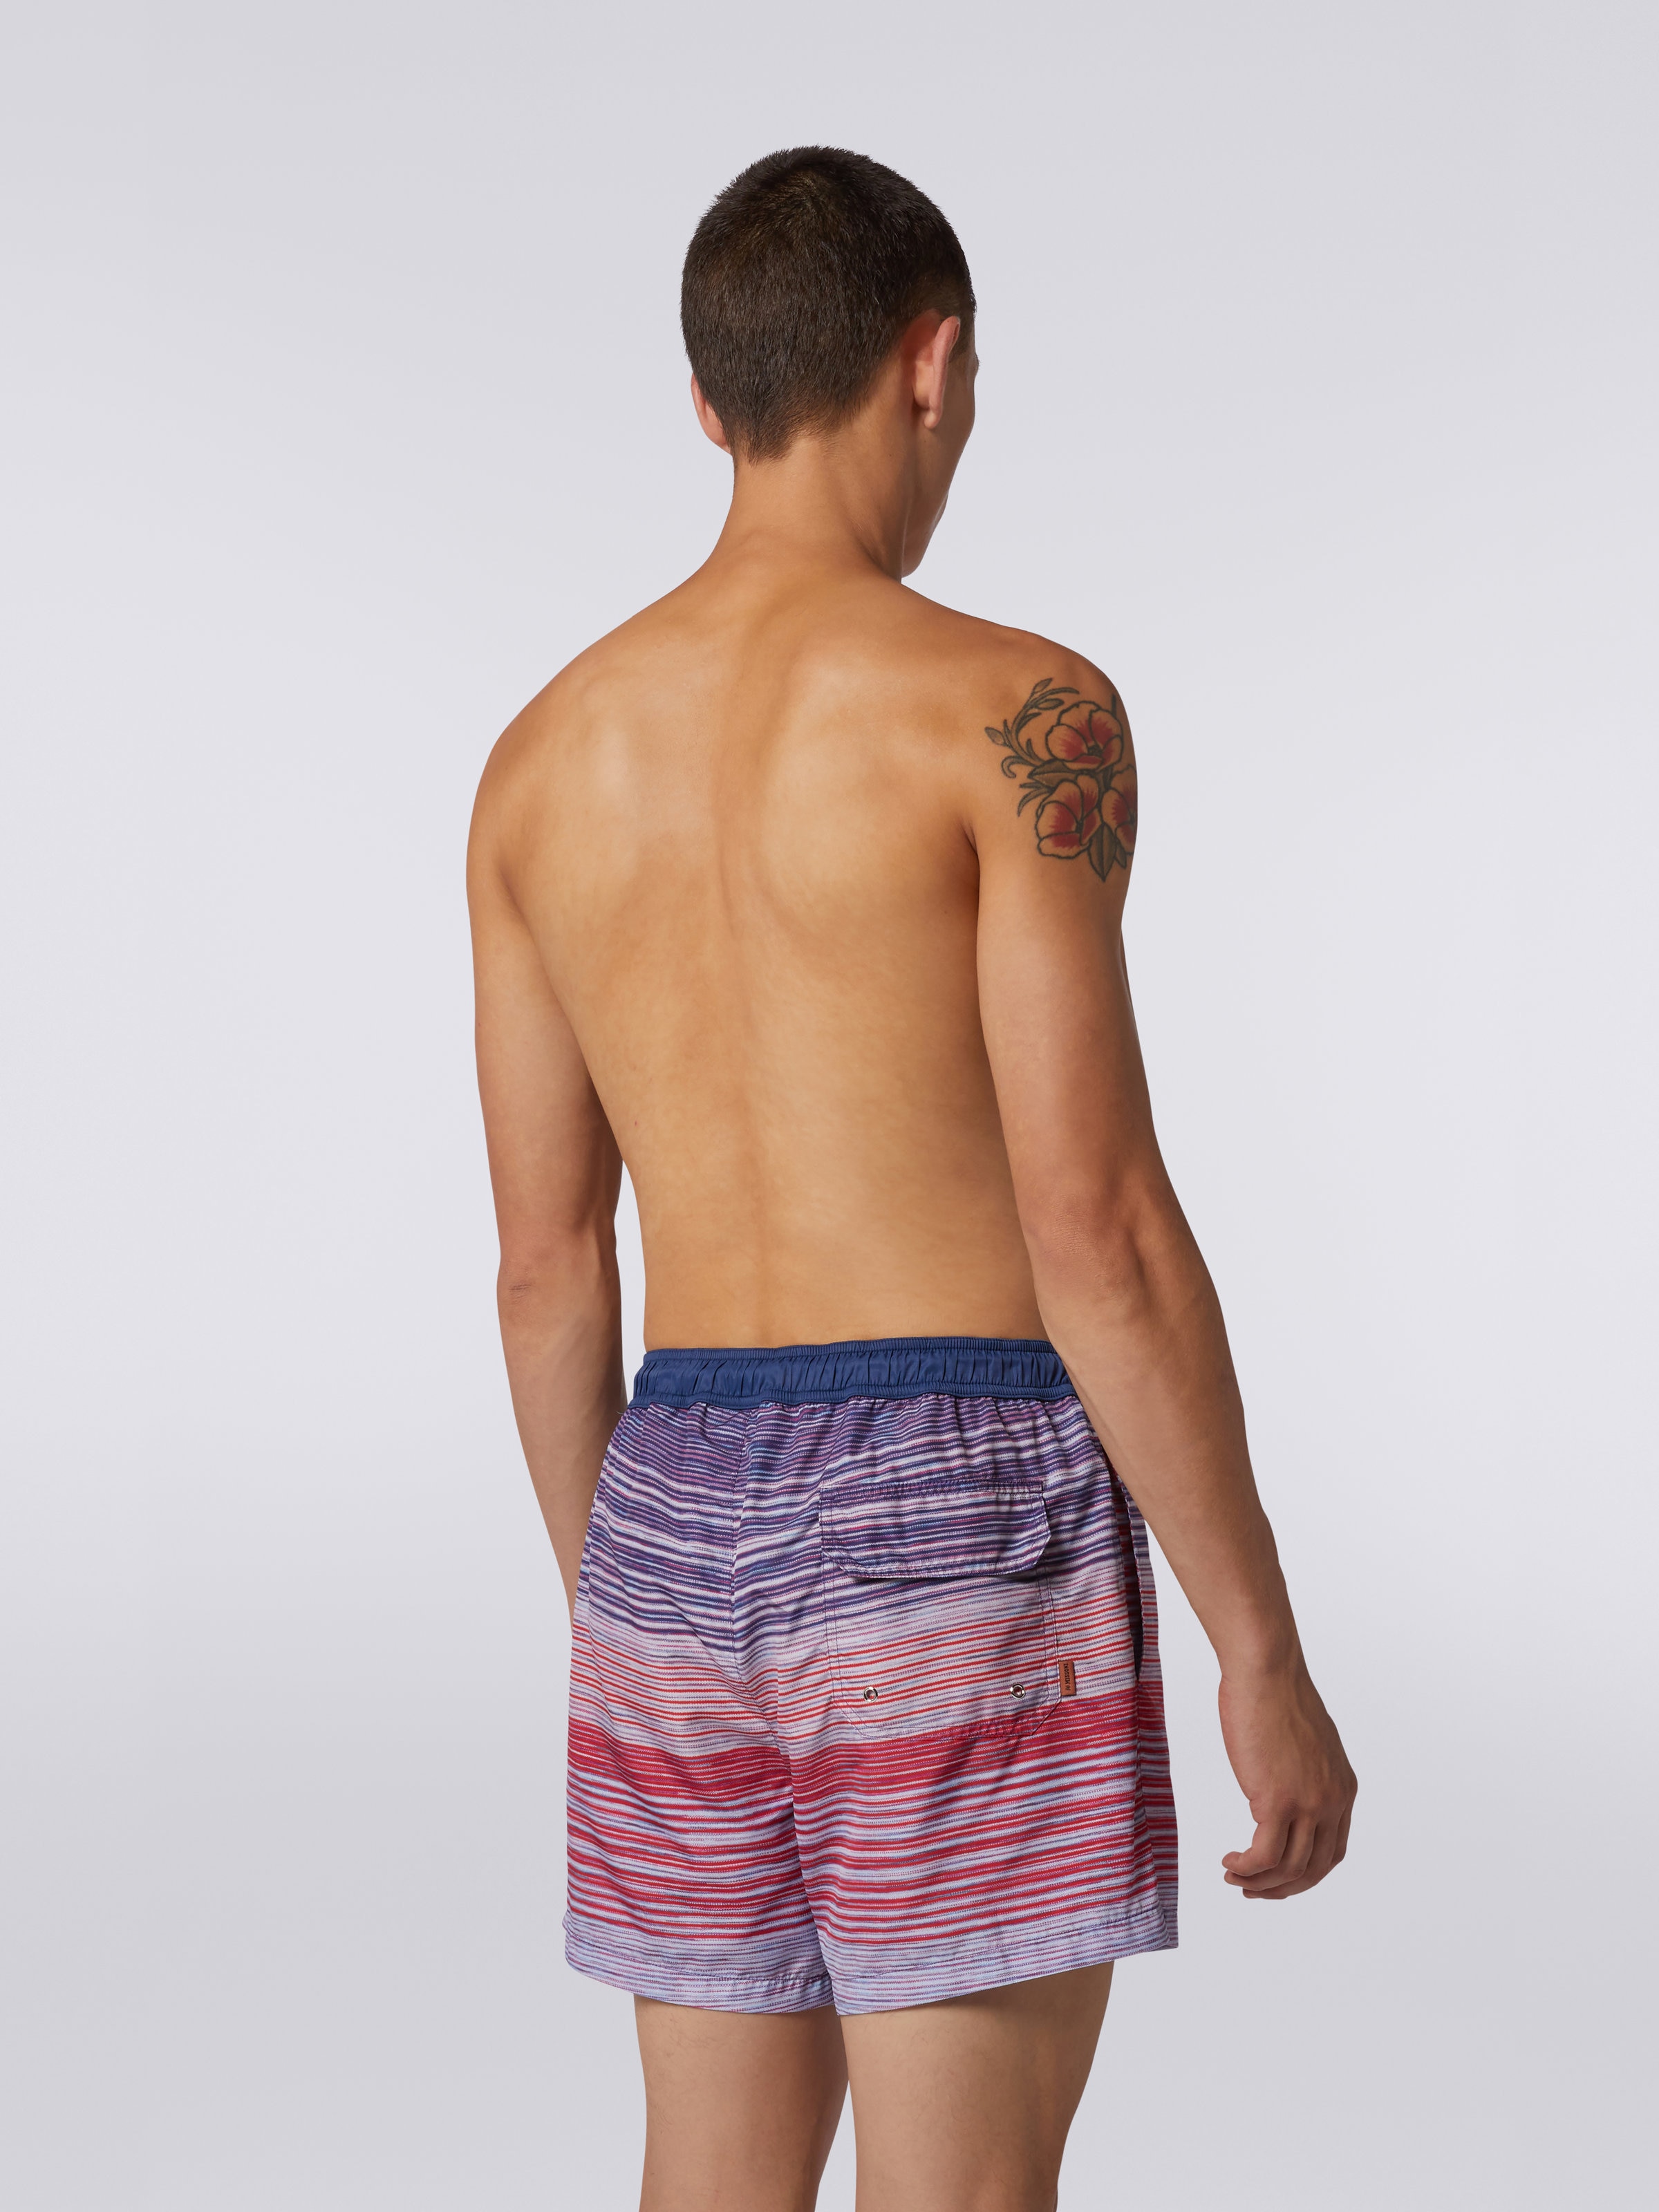 Nylon-blend swimming trunks in slub print, Red, Purple & Light Blue - 3